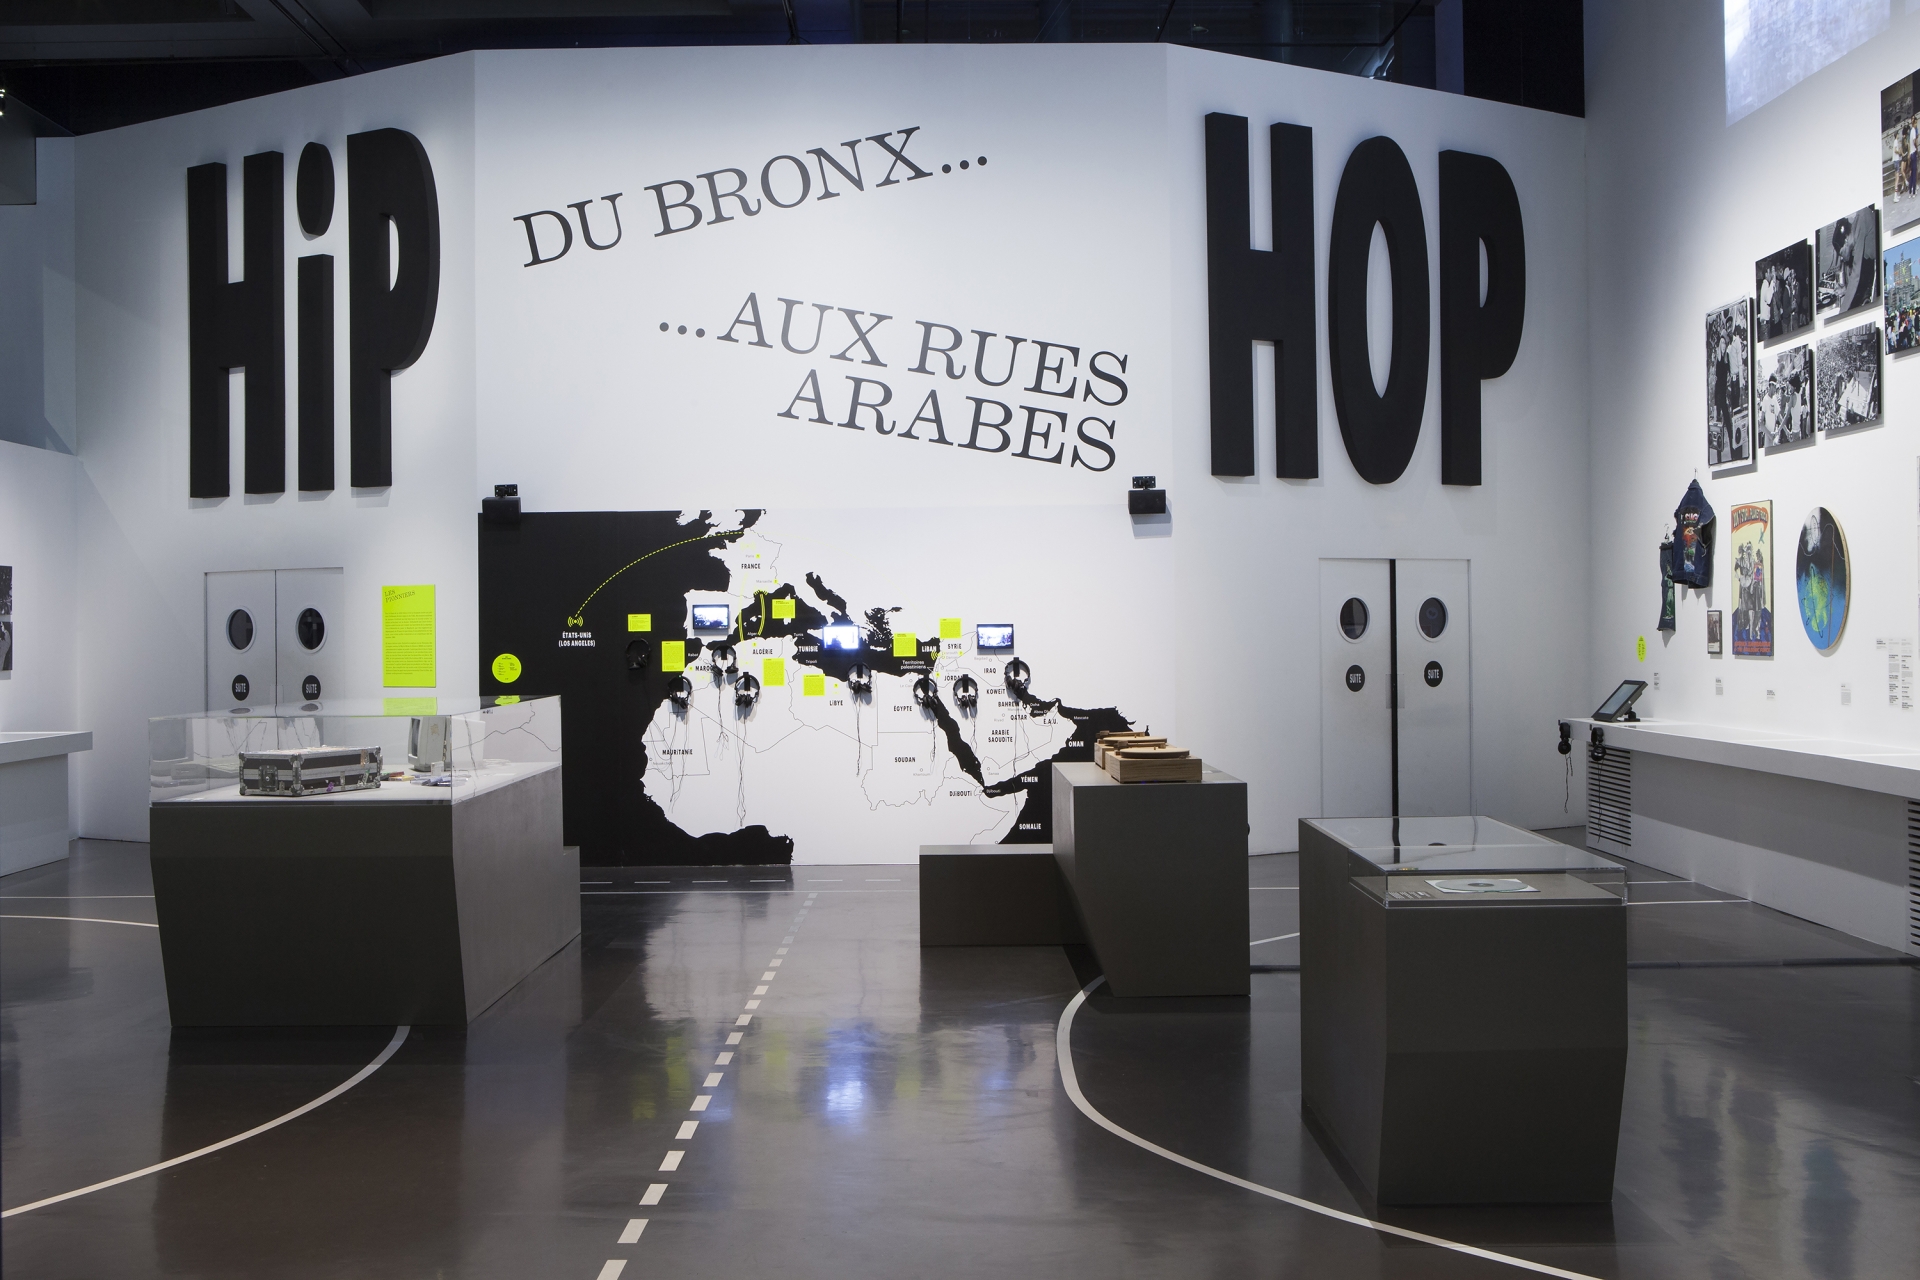 aura-studio-hip-hop-du-bronx-aux-rues-arabes_hiphop_05.jpg